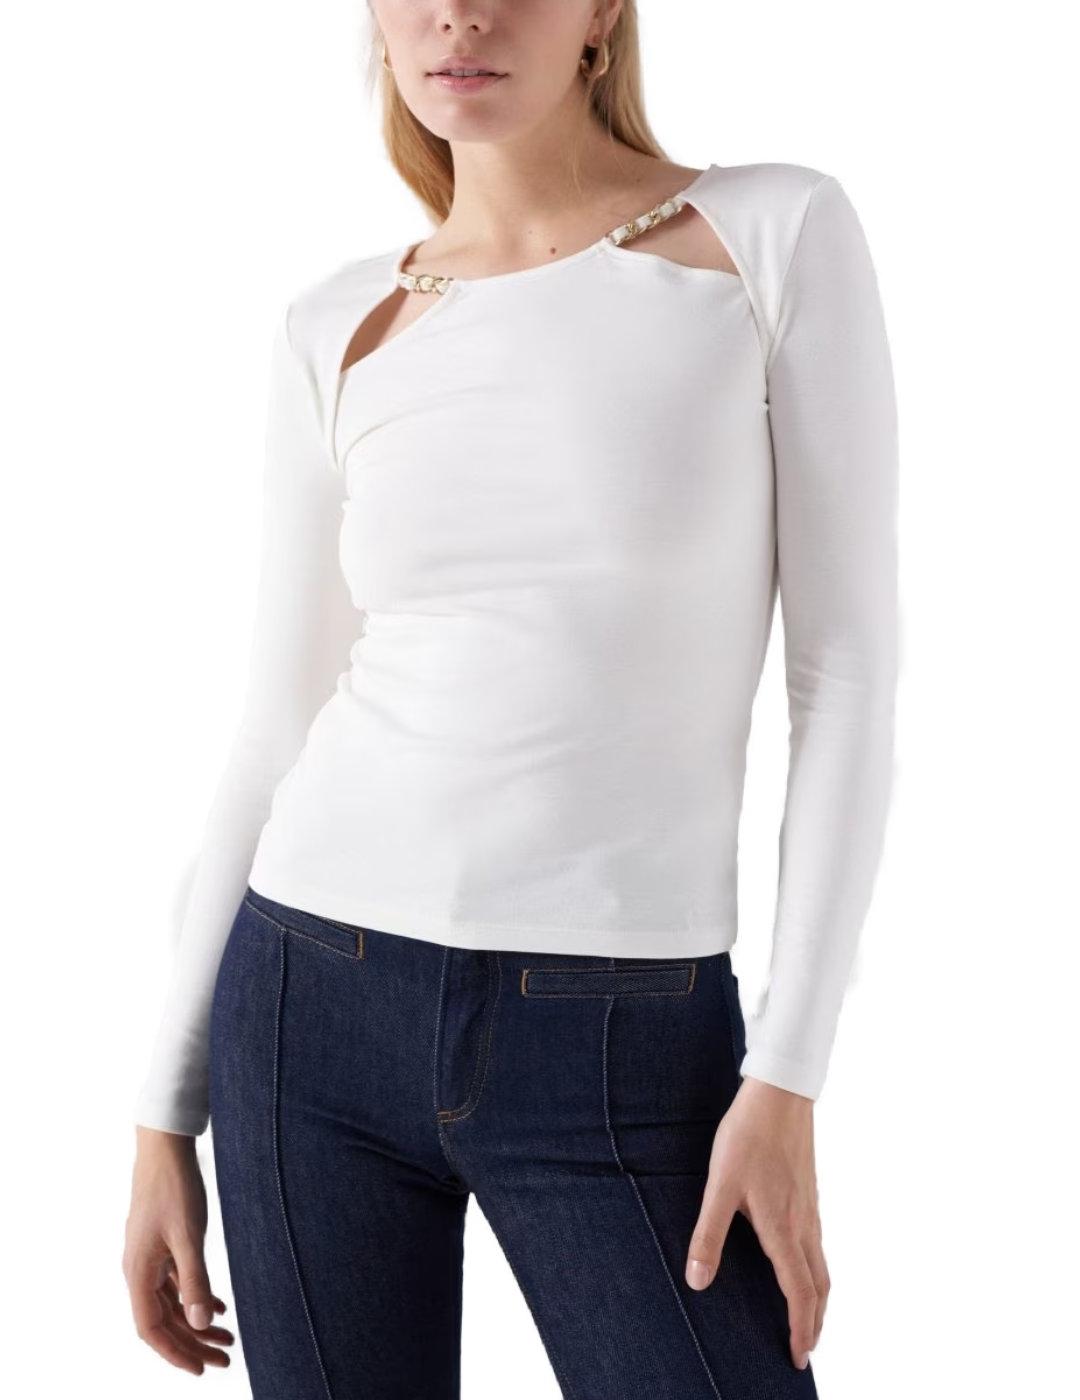 Camiseta Salsa blanca de manga larga con detalle de mujer